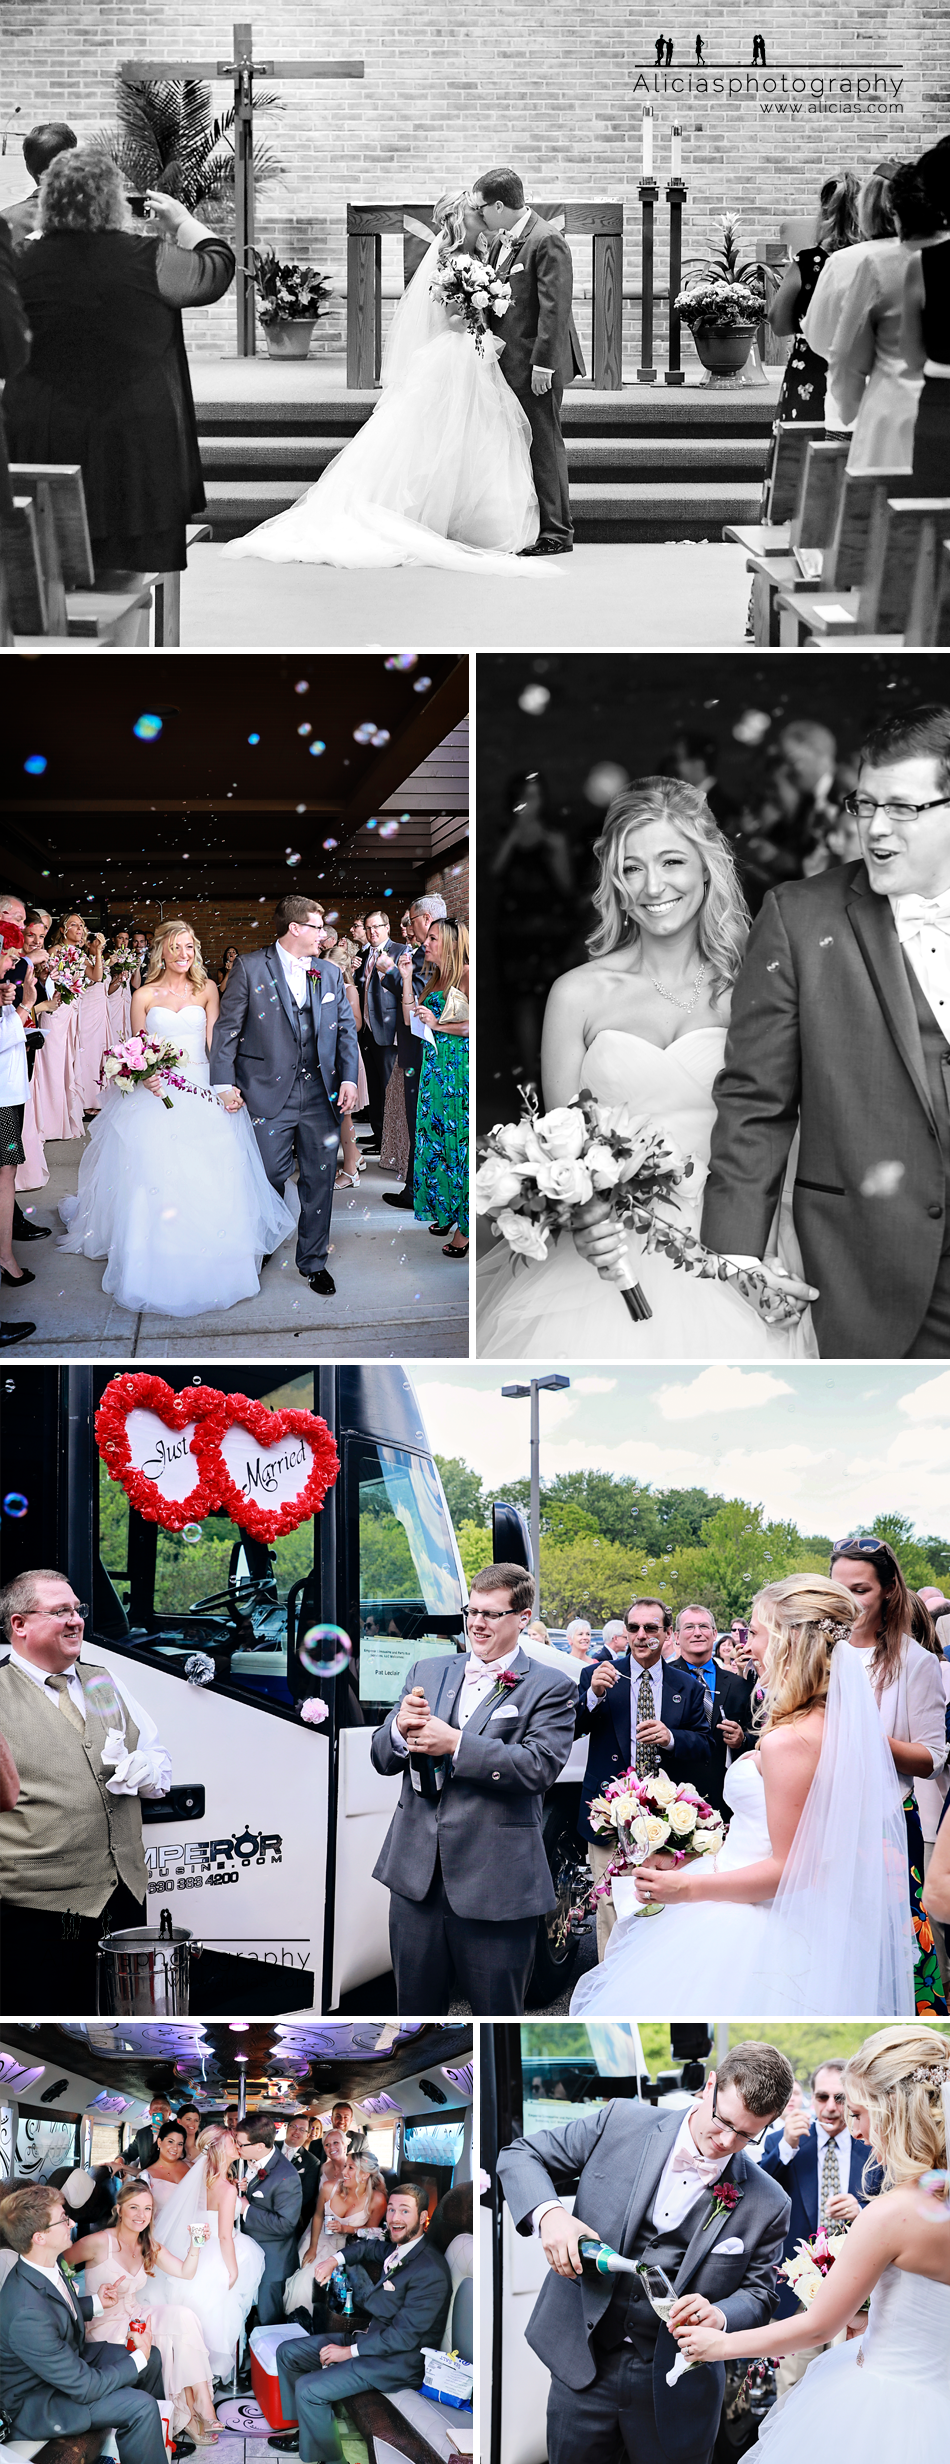 Chicago Wedding Photographer | Naperville Wedding Photographer | Alicia's Photography